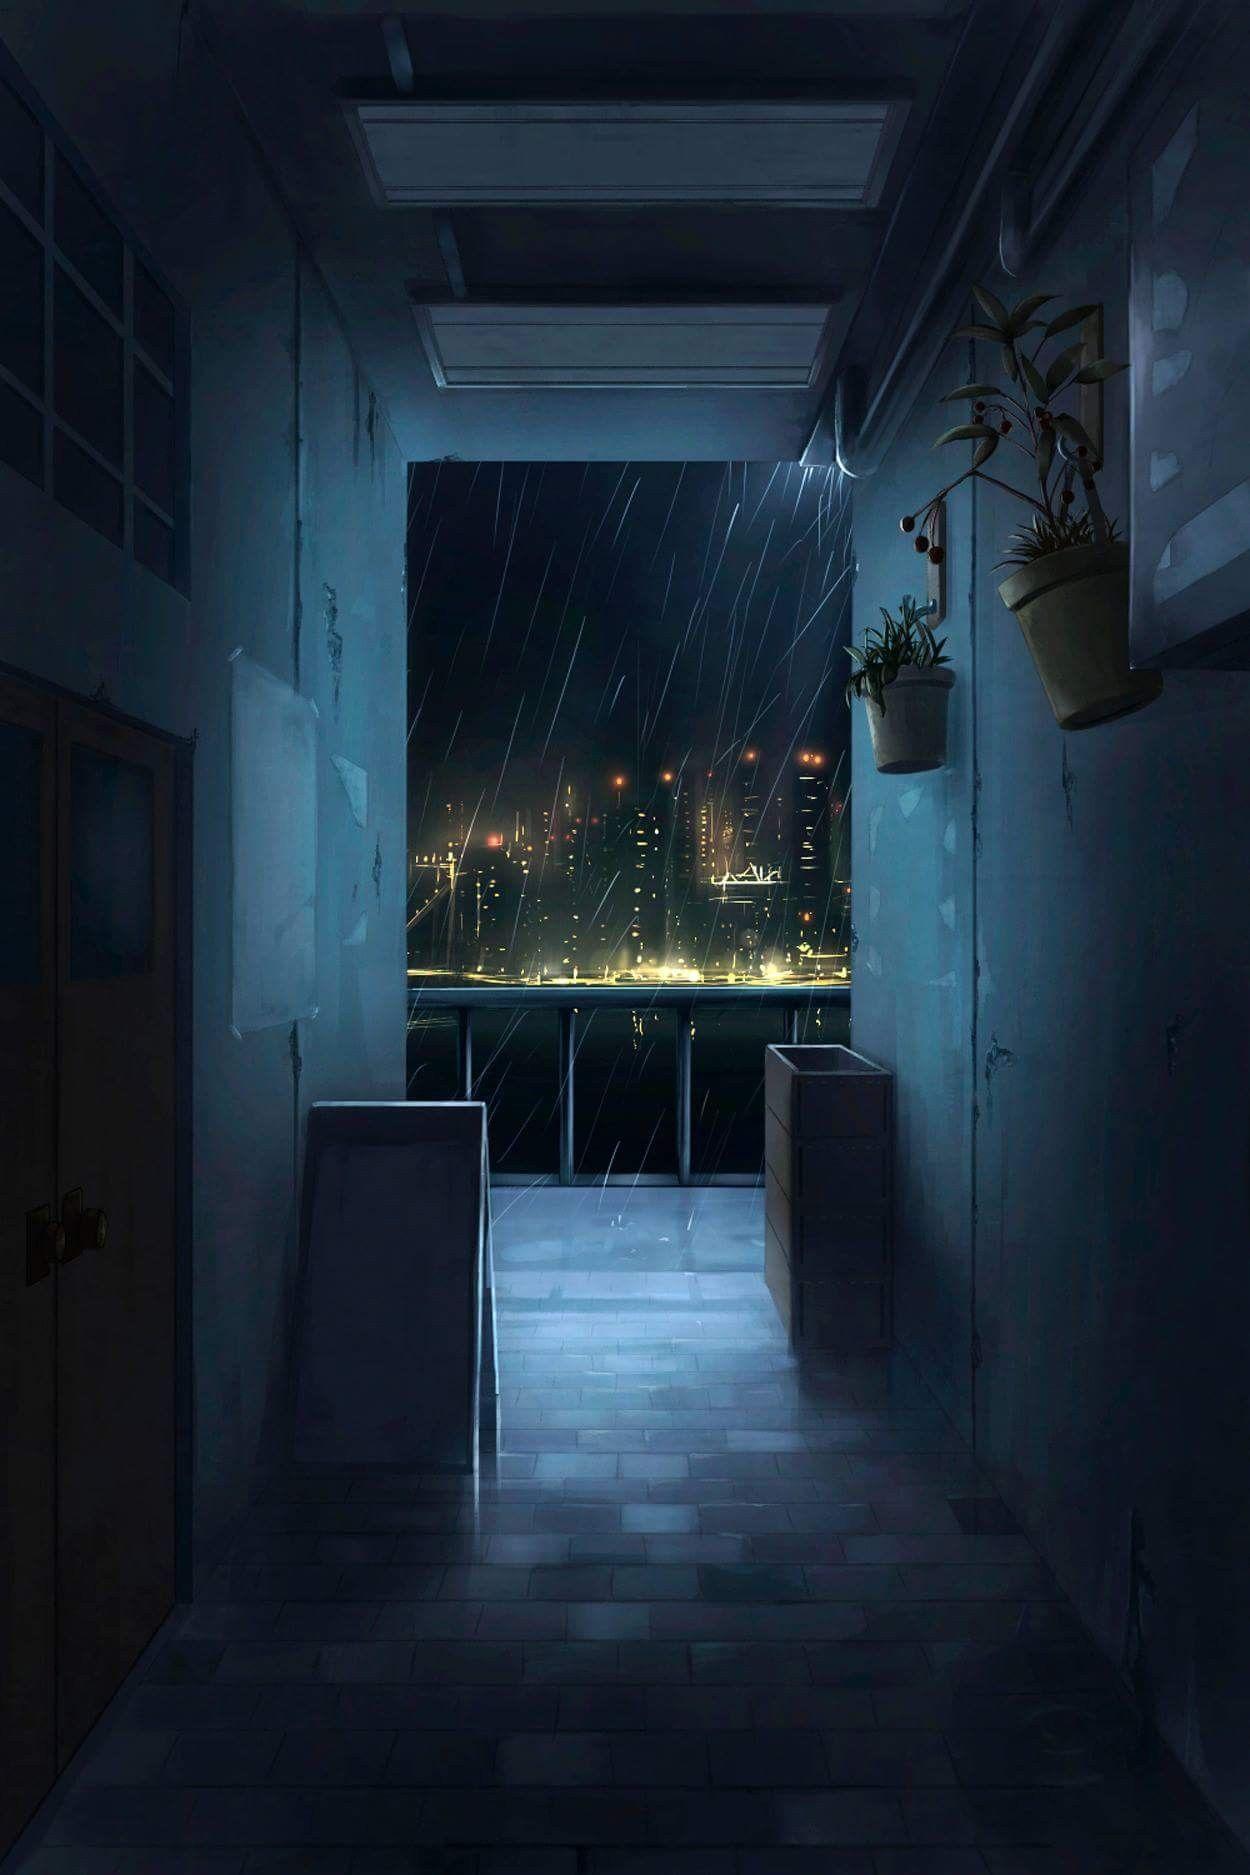 Corridor at night illustration #art #digitalart